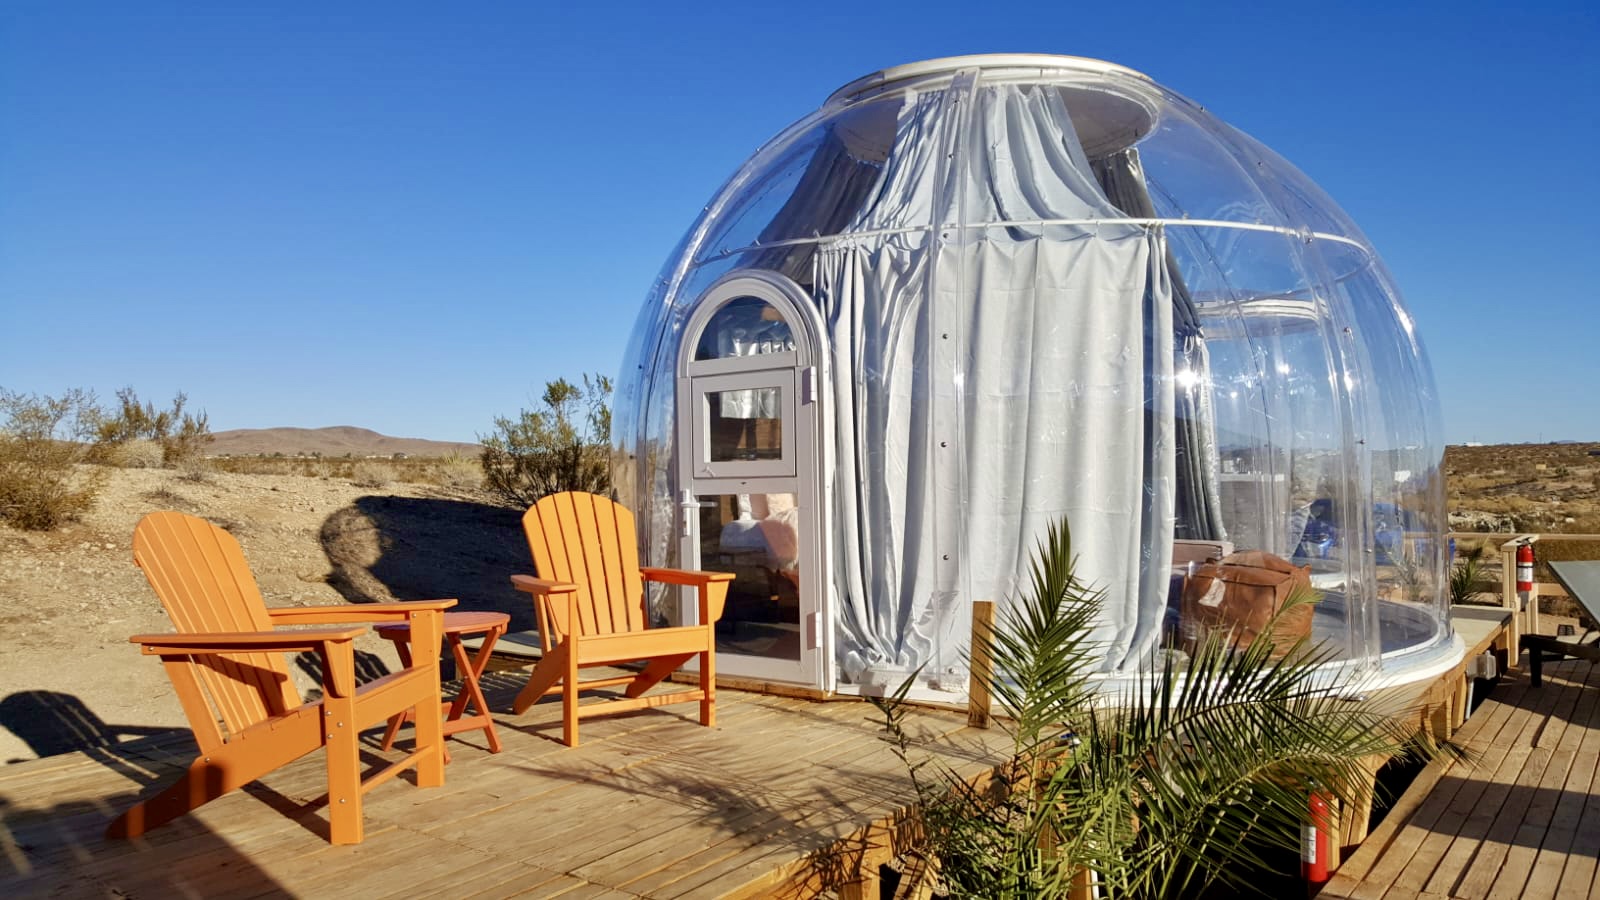 JTHAVN-Joshua Tree Remote Dessert Bubble Dome - Dome houses for Rent in  Joshua Tree, California, United States